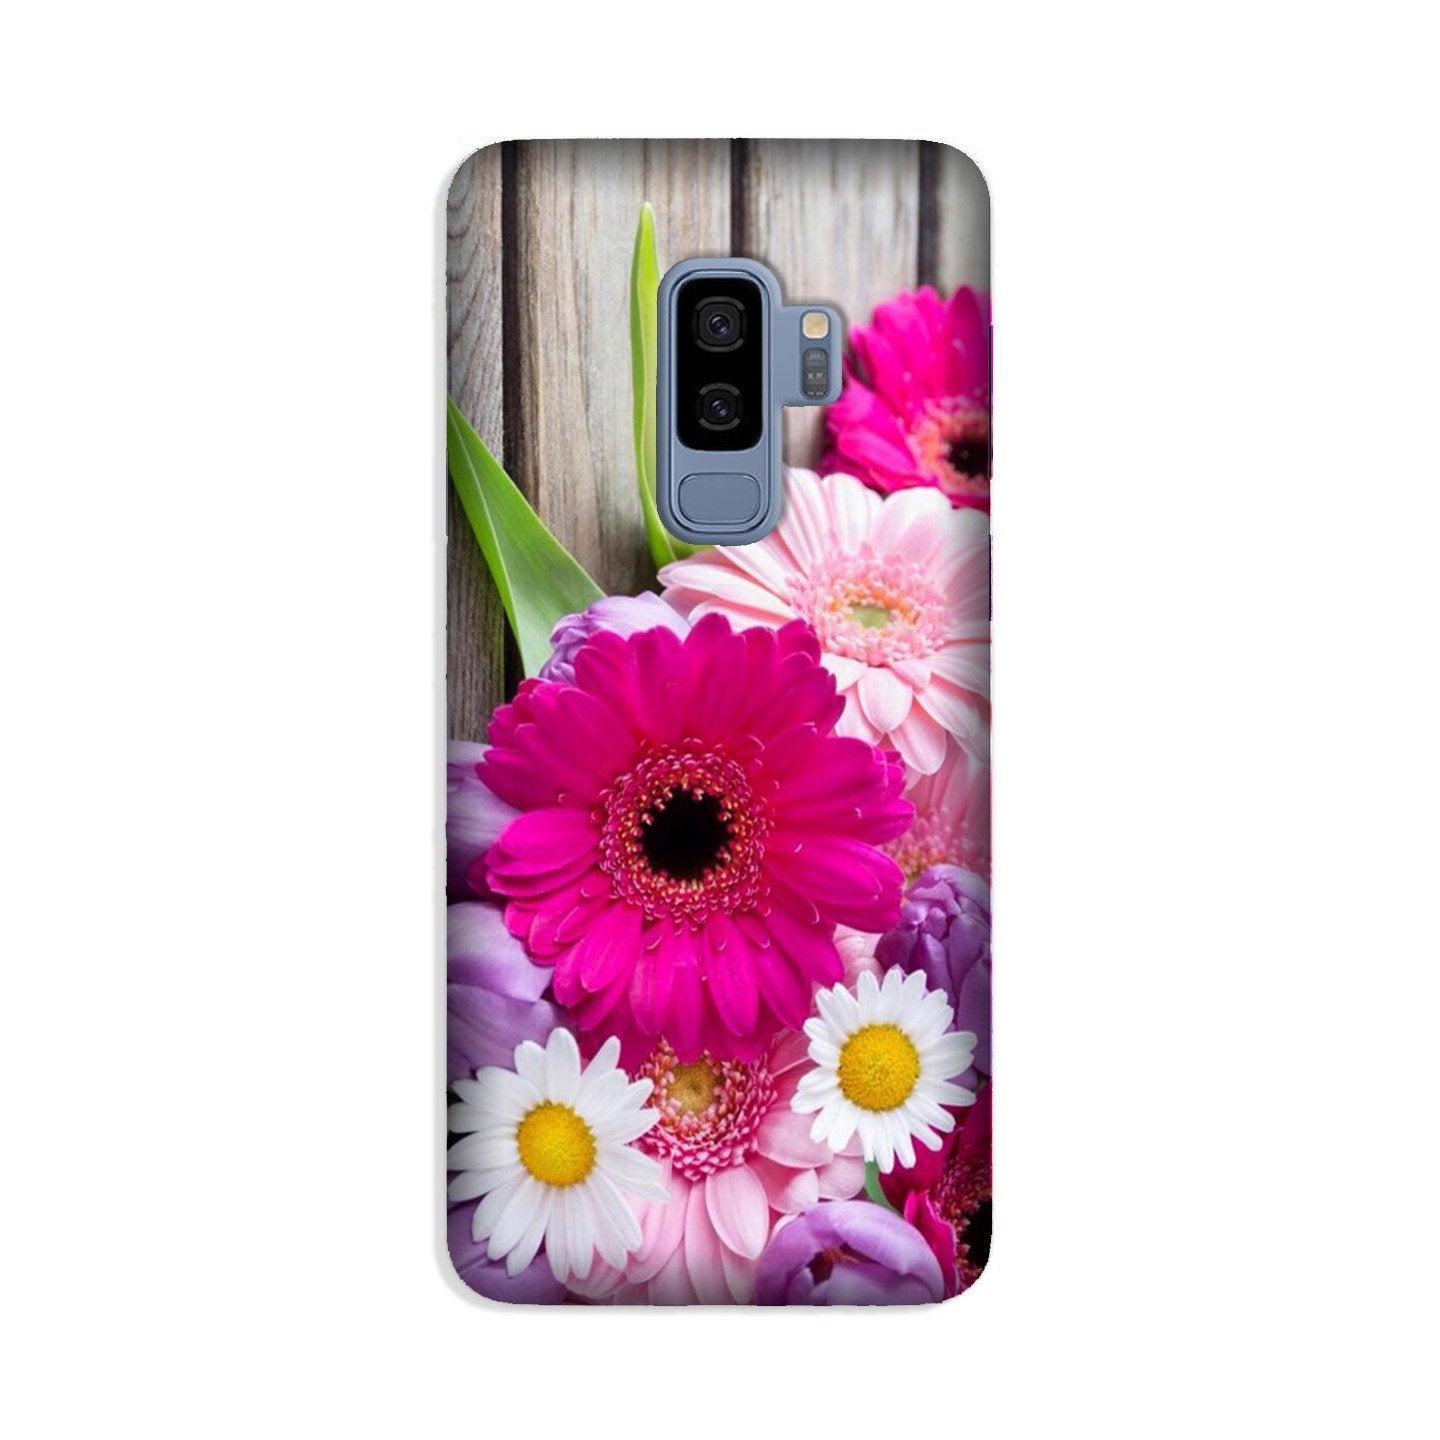 Coloful Daisy2 Case for Galaxy S9 Plus